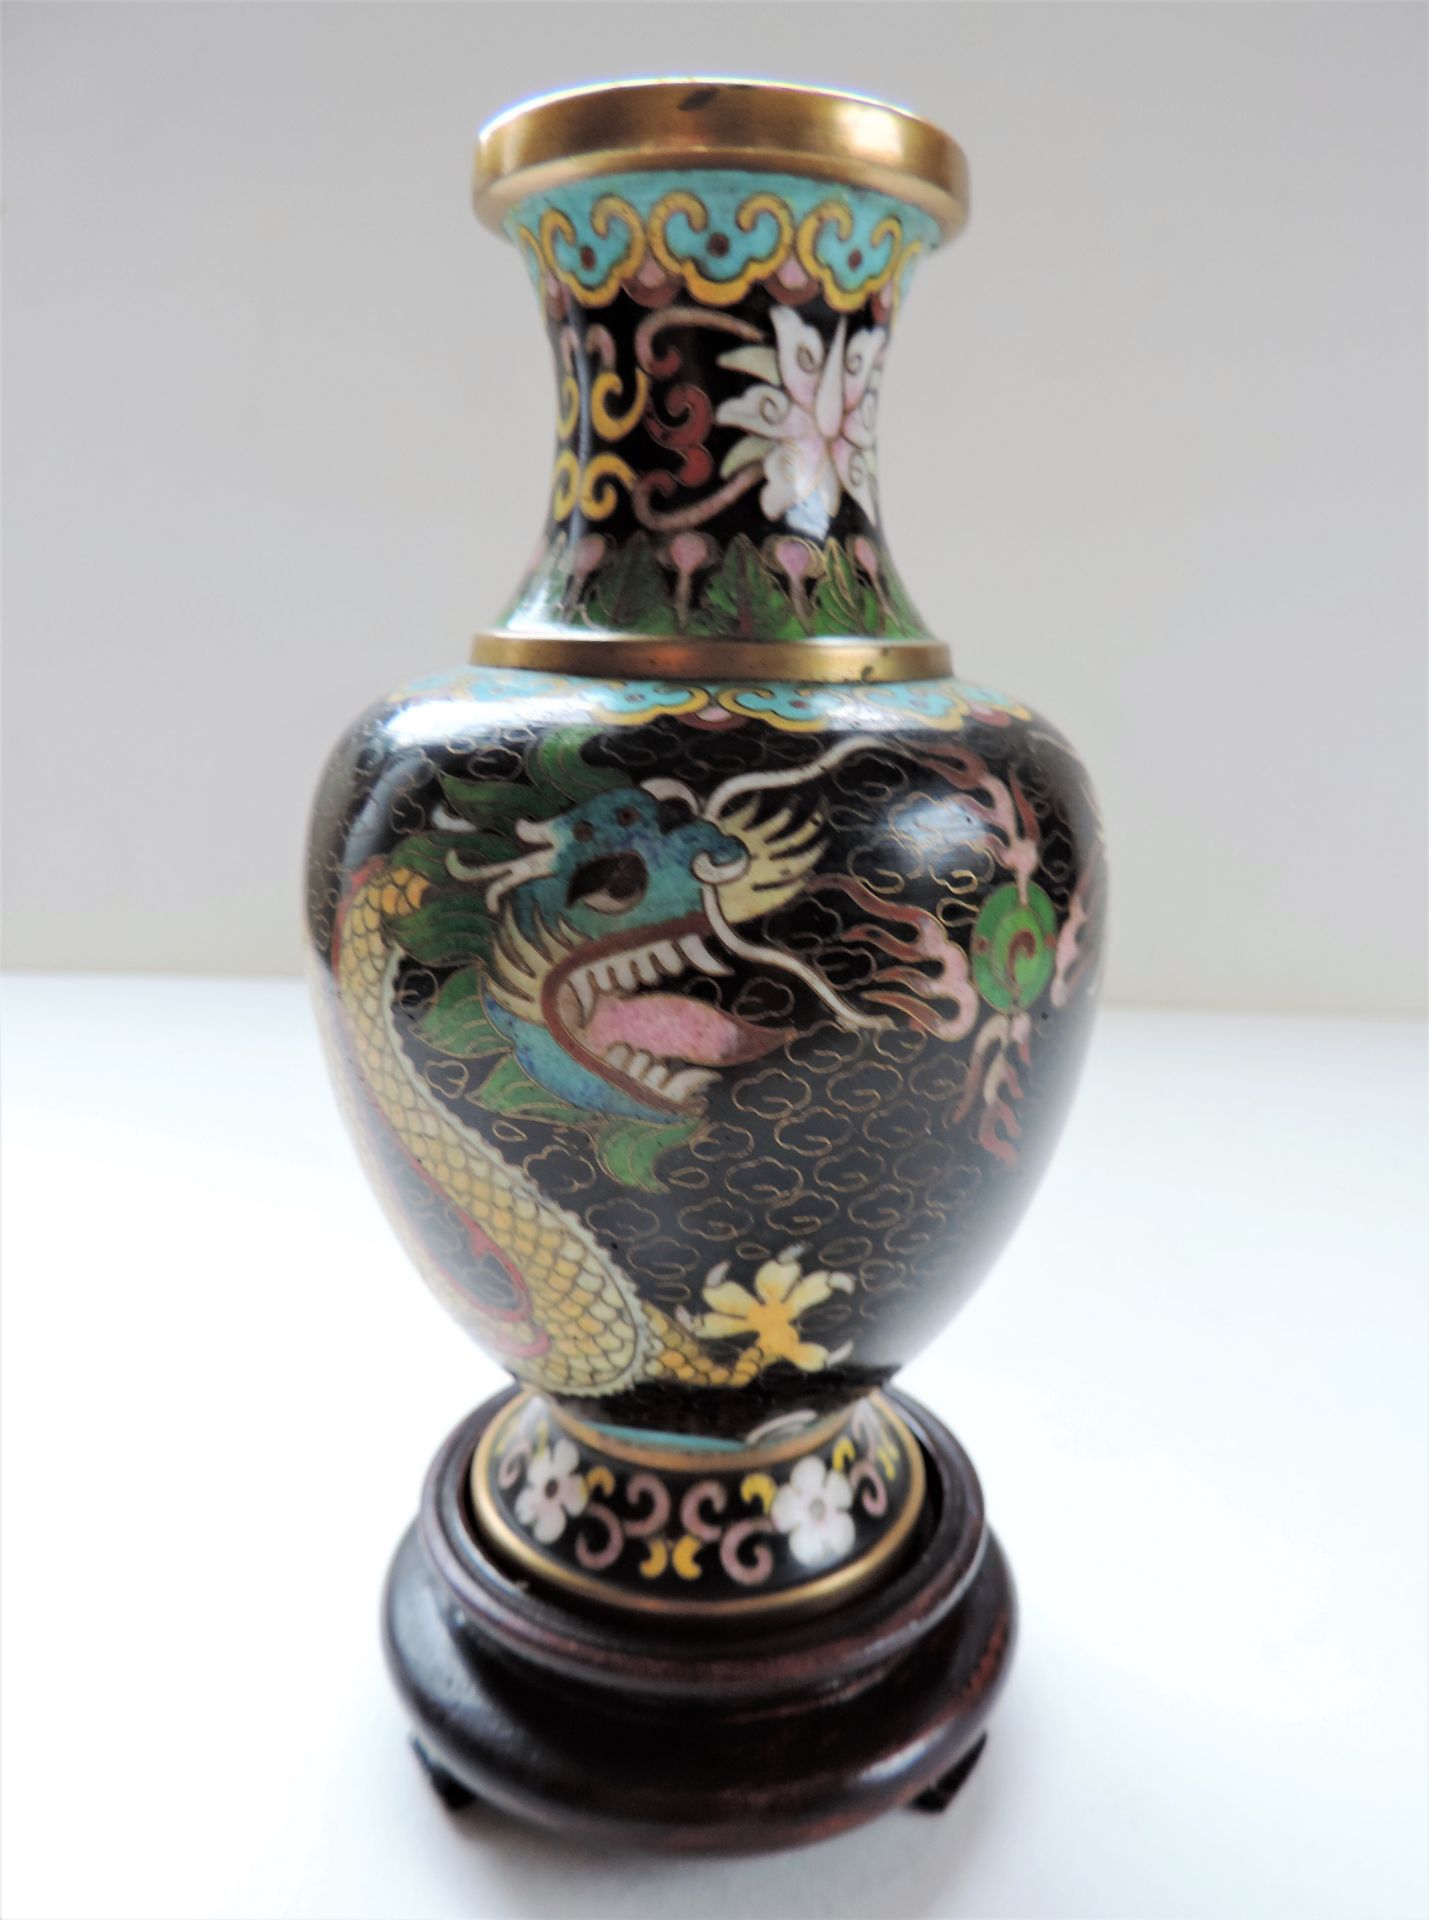 Vintage Cloisonne Imperial Dragon Vase 16cm tall - Image 3 of 7